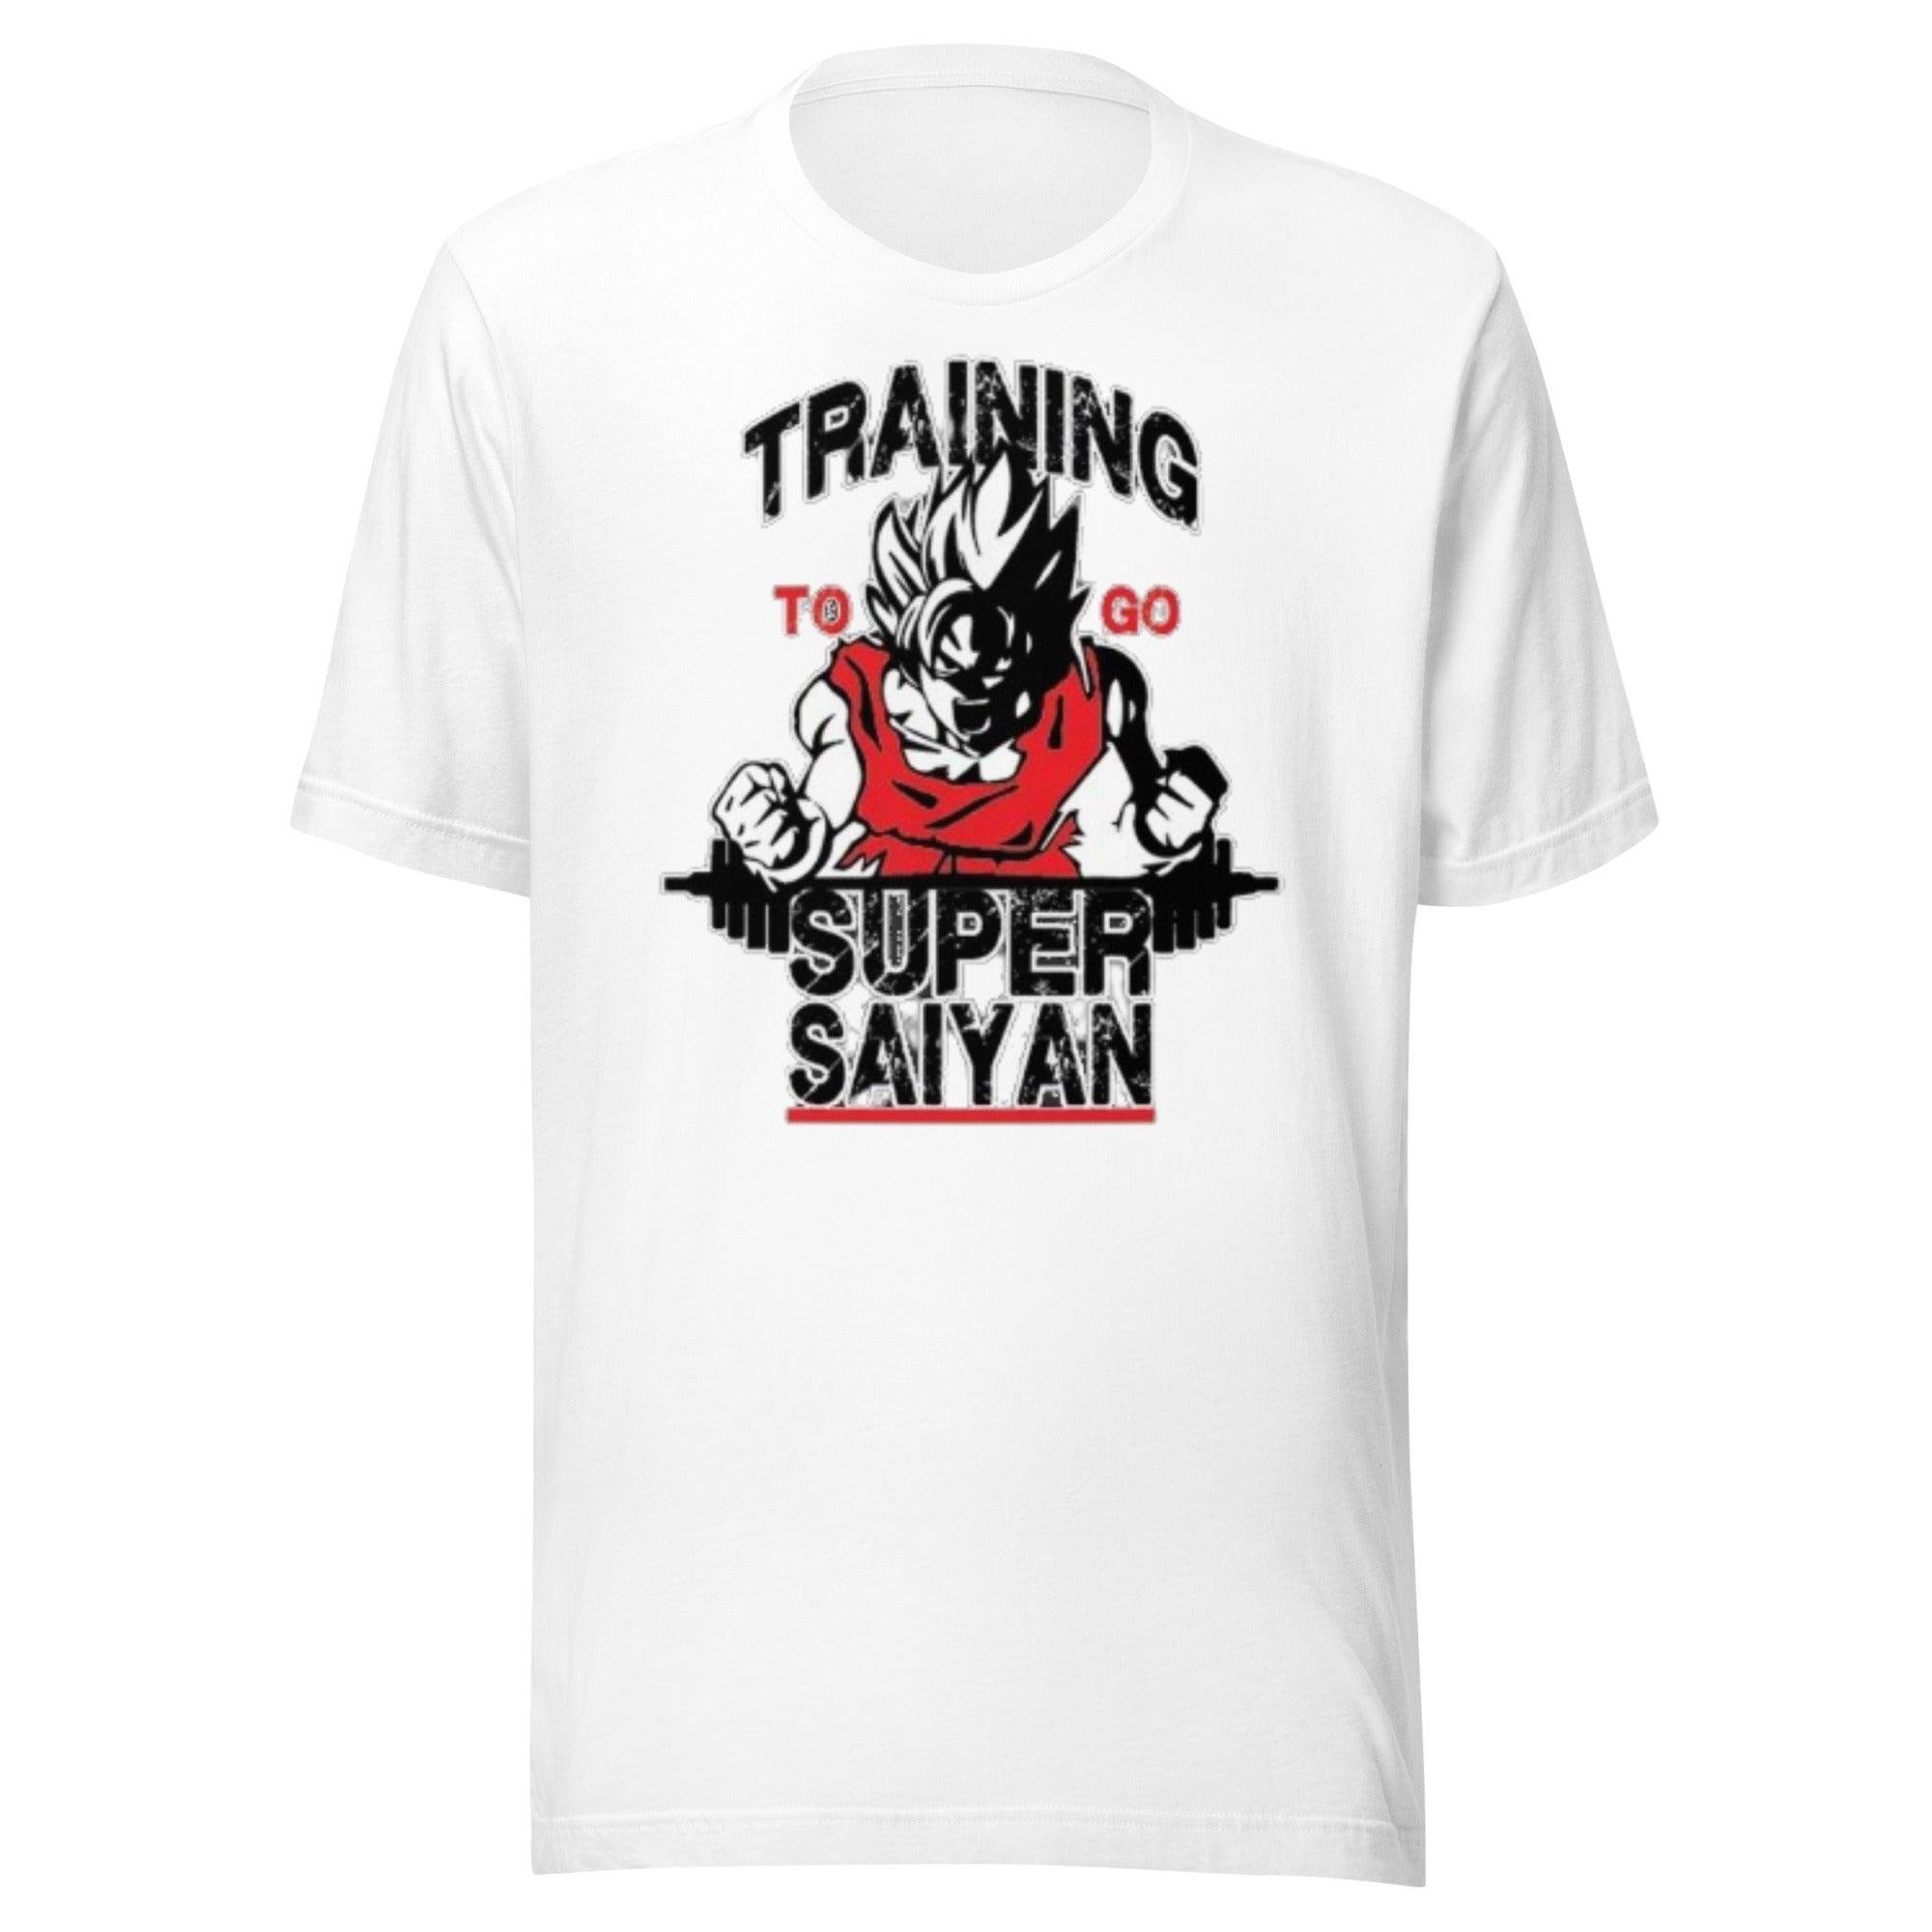 Gym T-shirt Training To Go Super Saiyan Short Sleeve 100% Cotton Crew Neck Top - TopKoalaTee